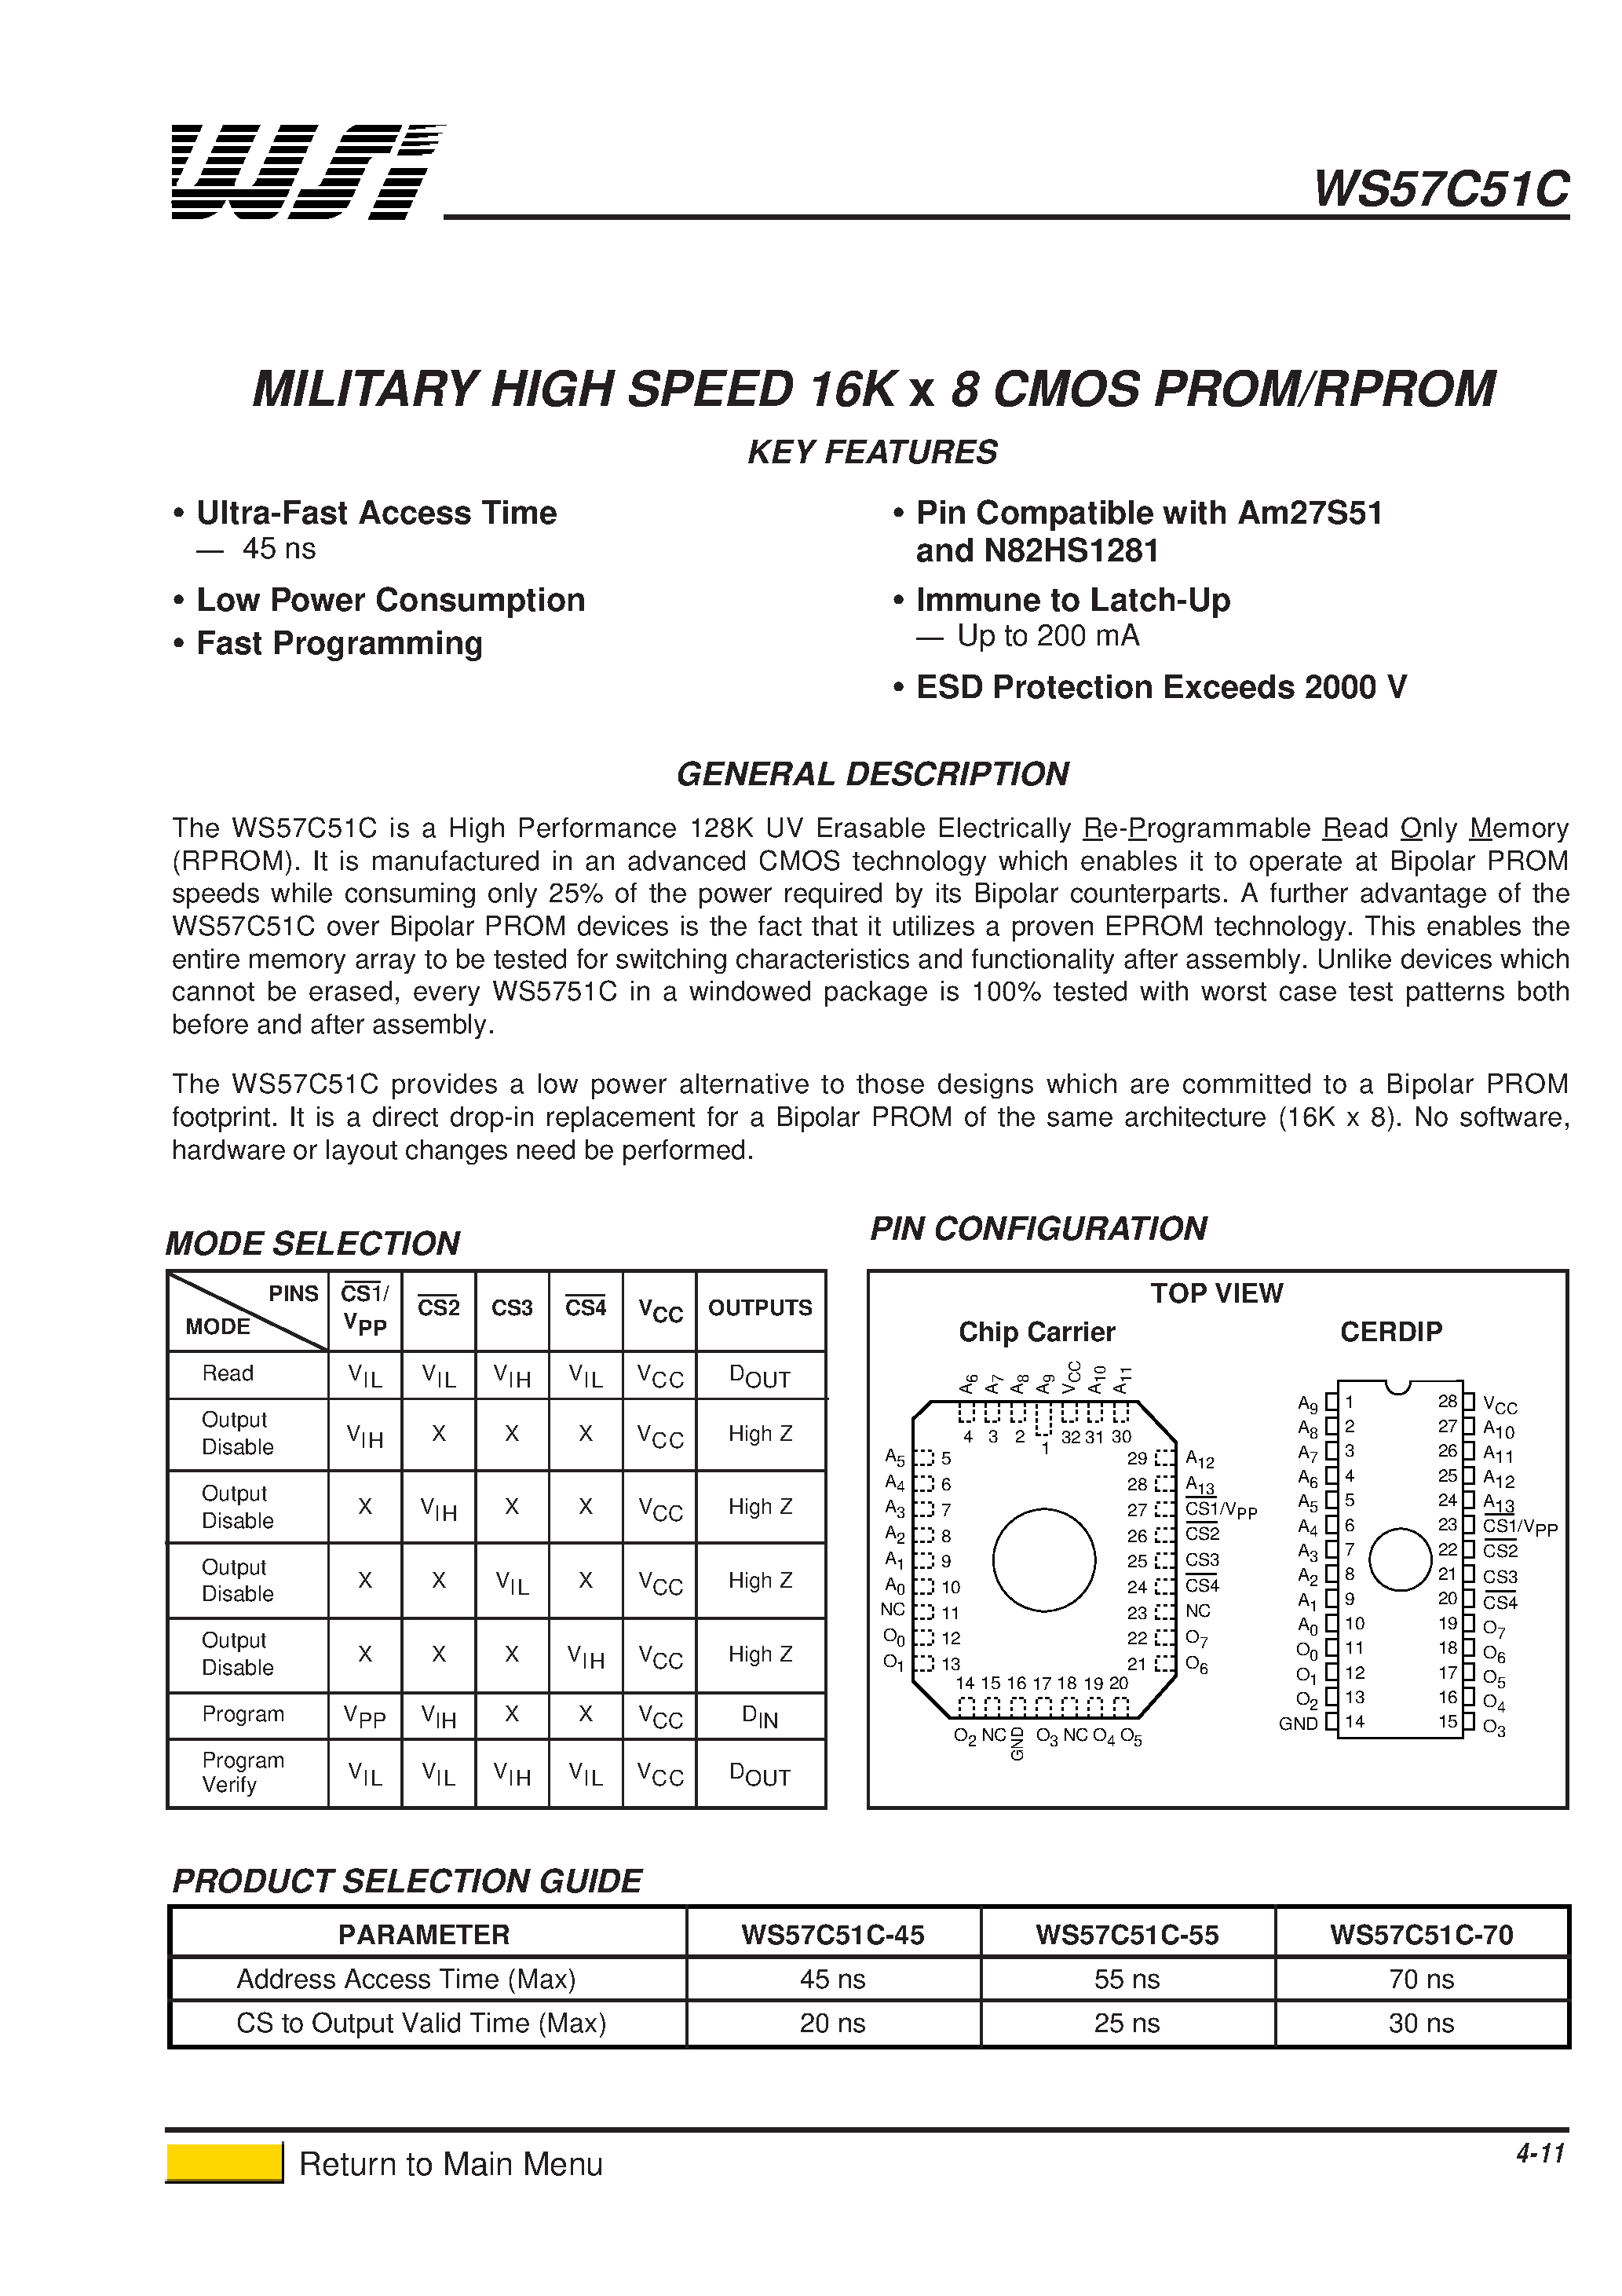 Даташит WS57C51C-55TMB - HIGH SPEED 16K x 8 CMOS PROM/RPROM страница 1